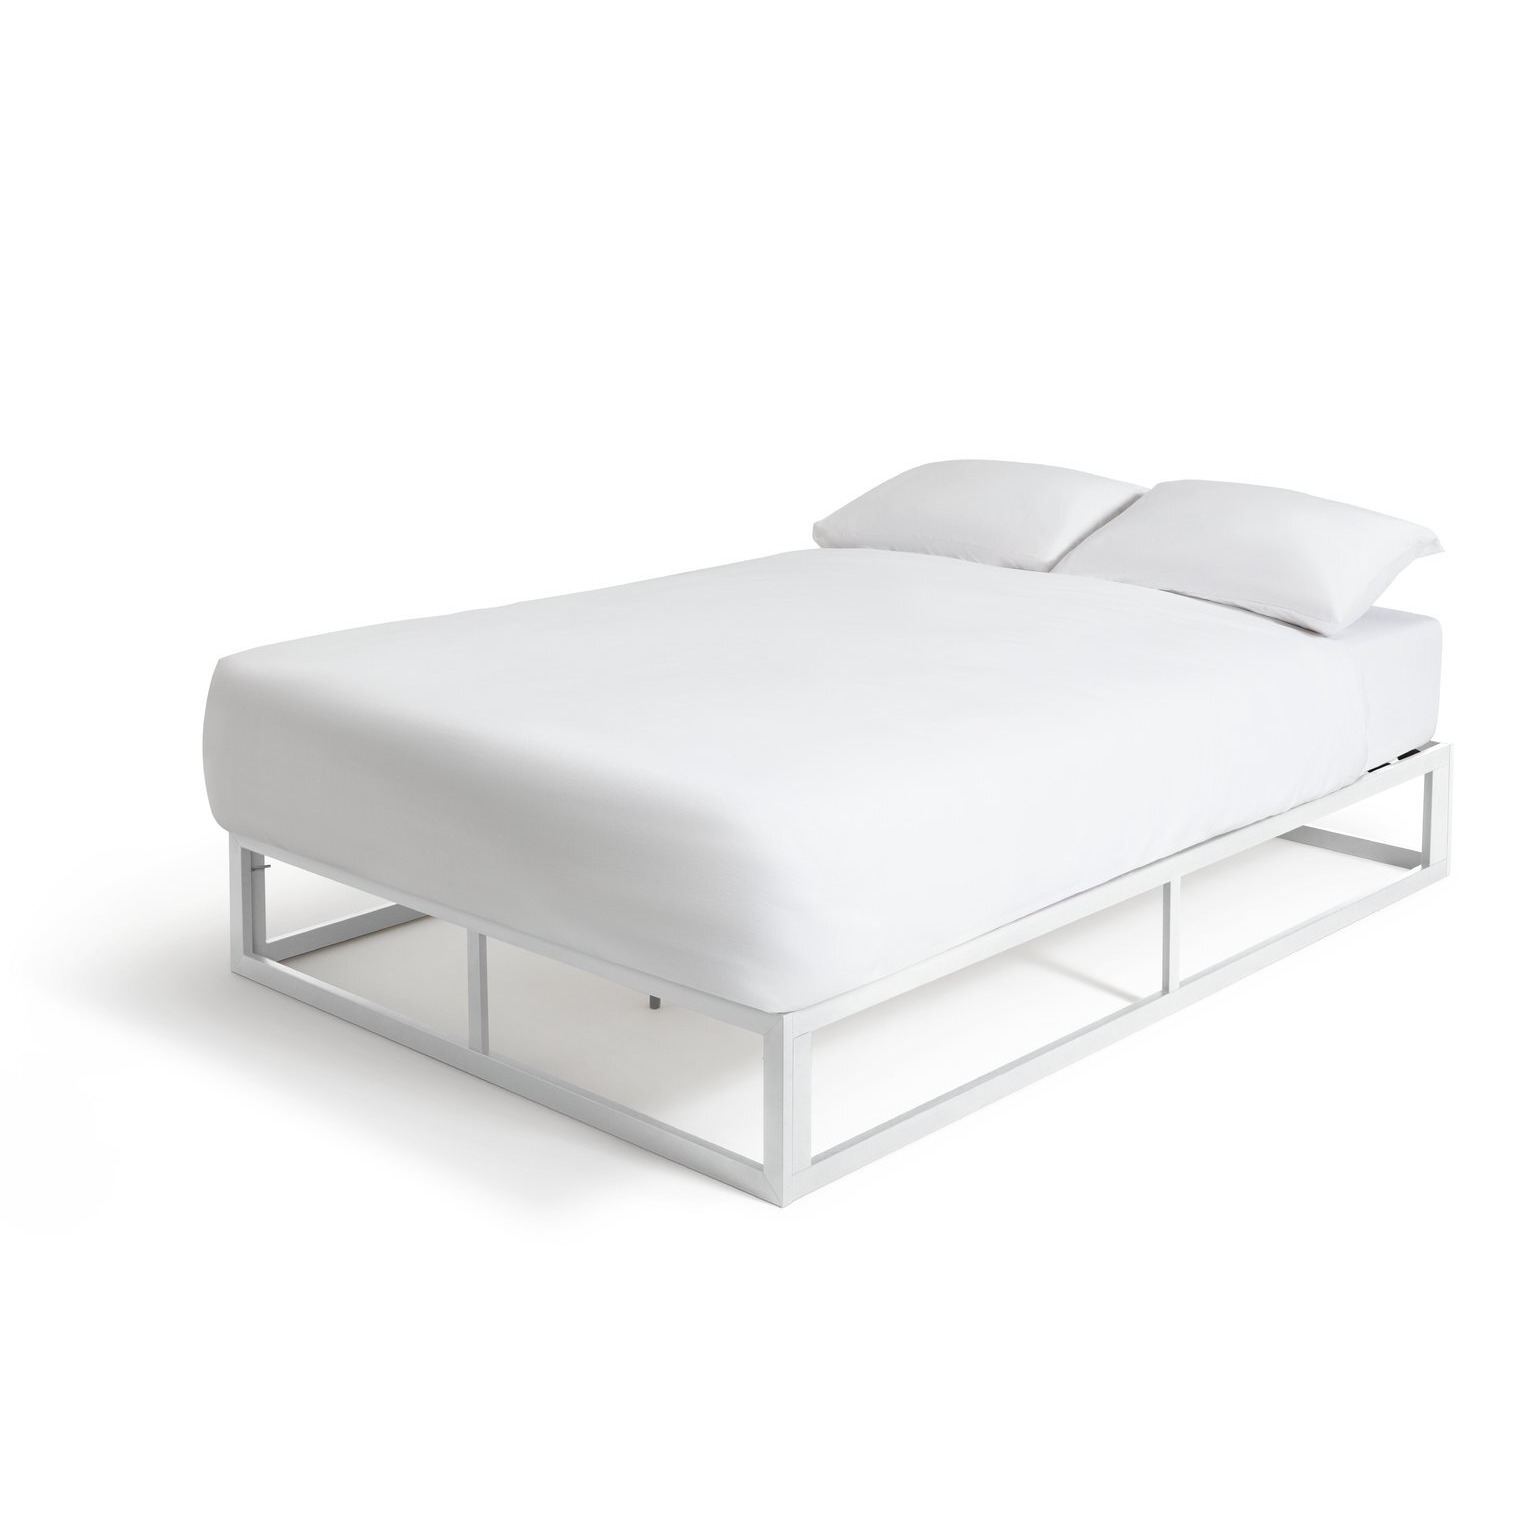 Habitat Platform Double Metal Bed Frame - White